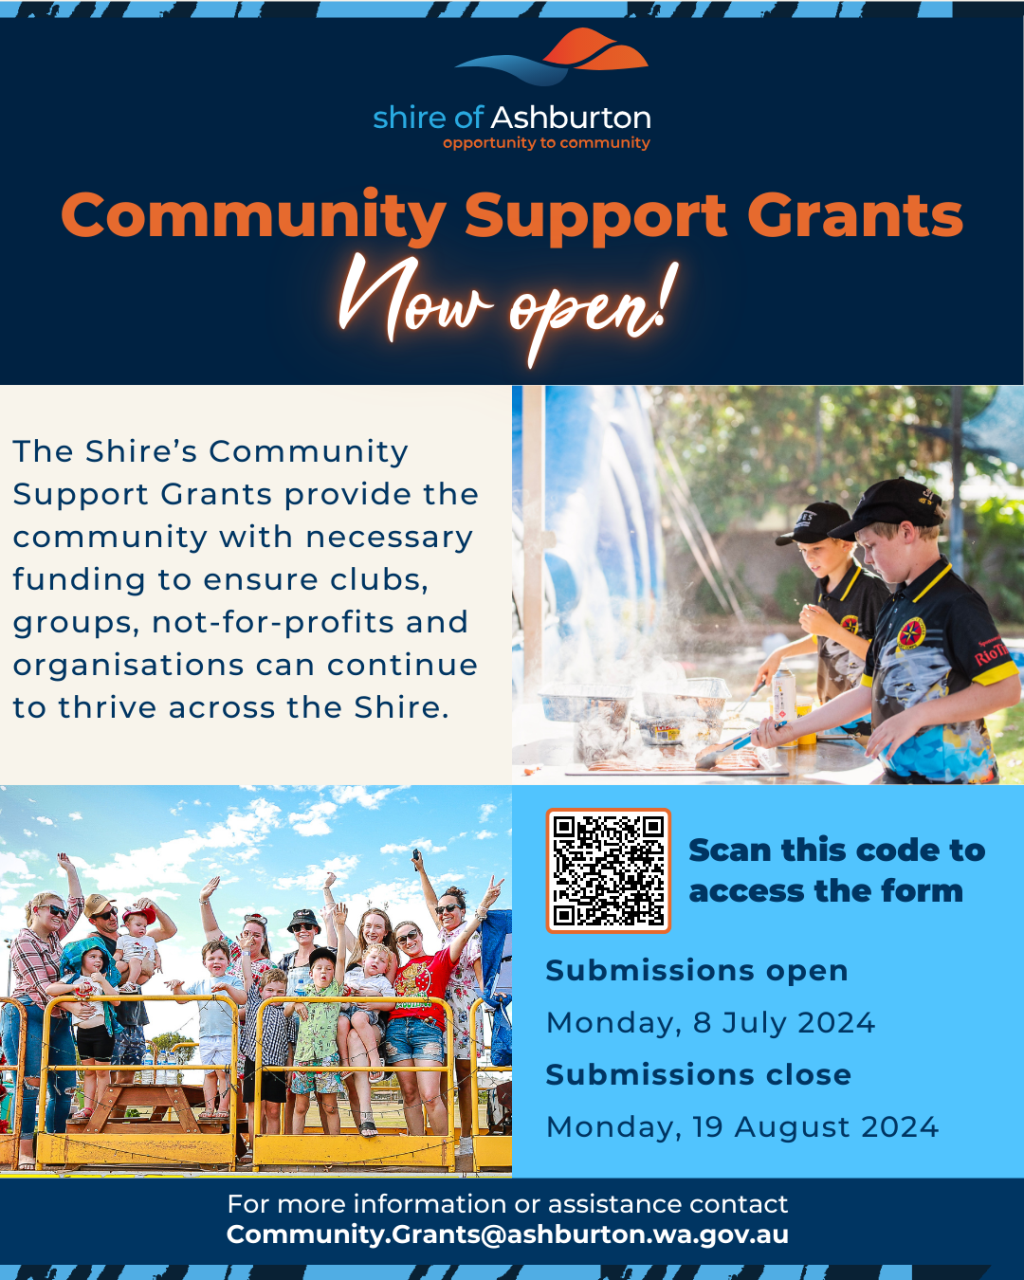 Community Support Grants Applications Open!